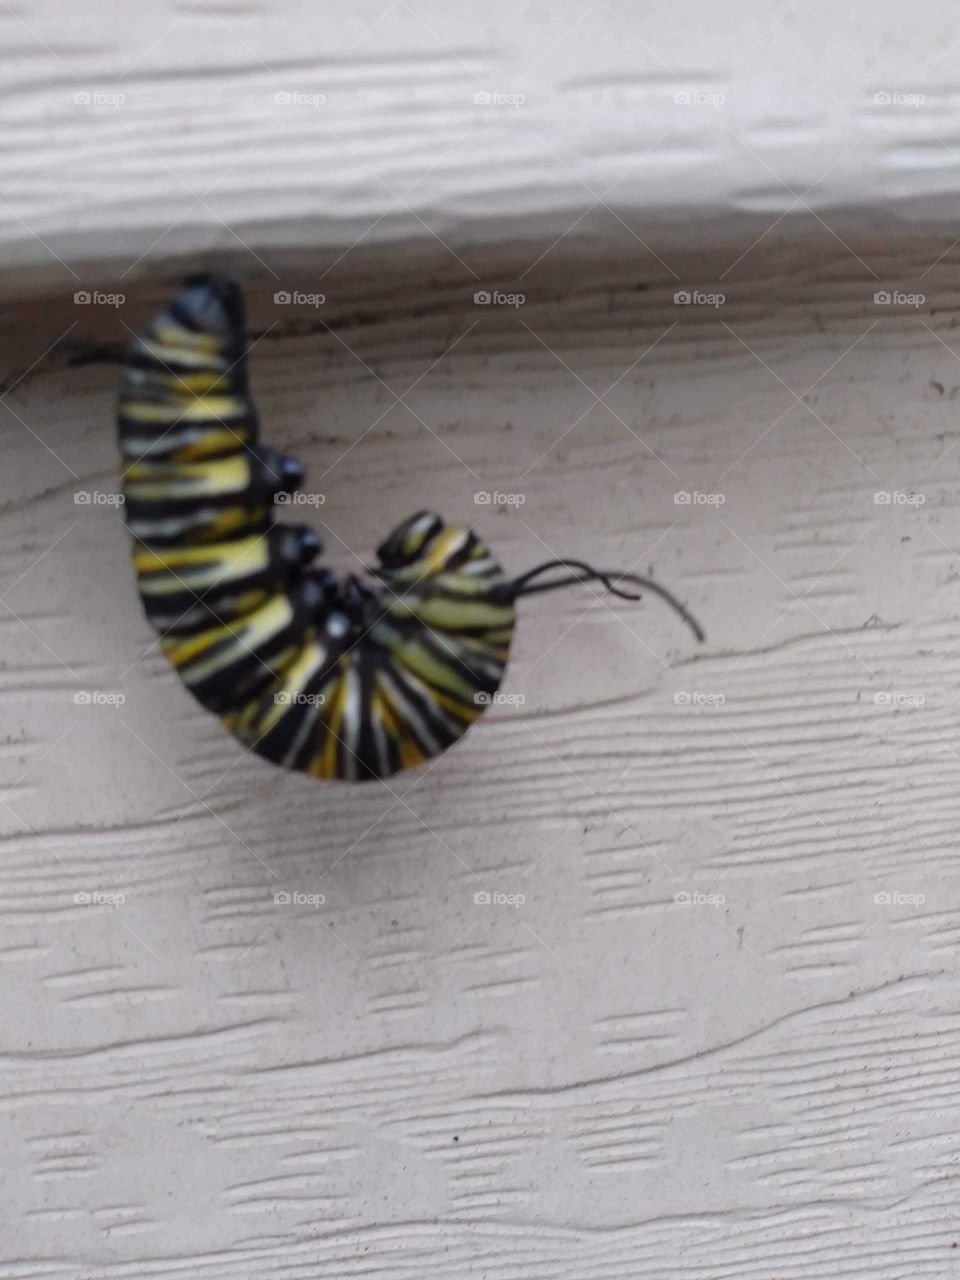 Caterpillar pre-cocoon